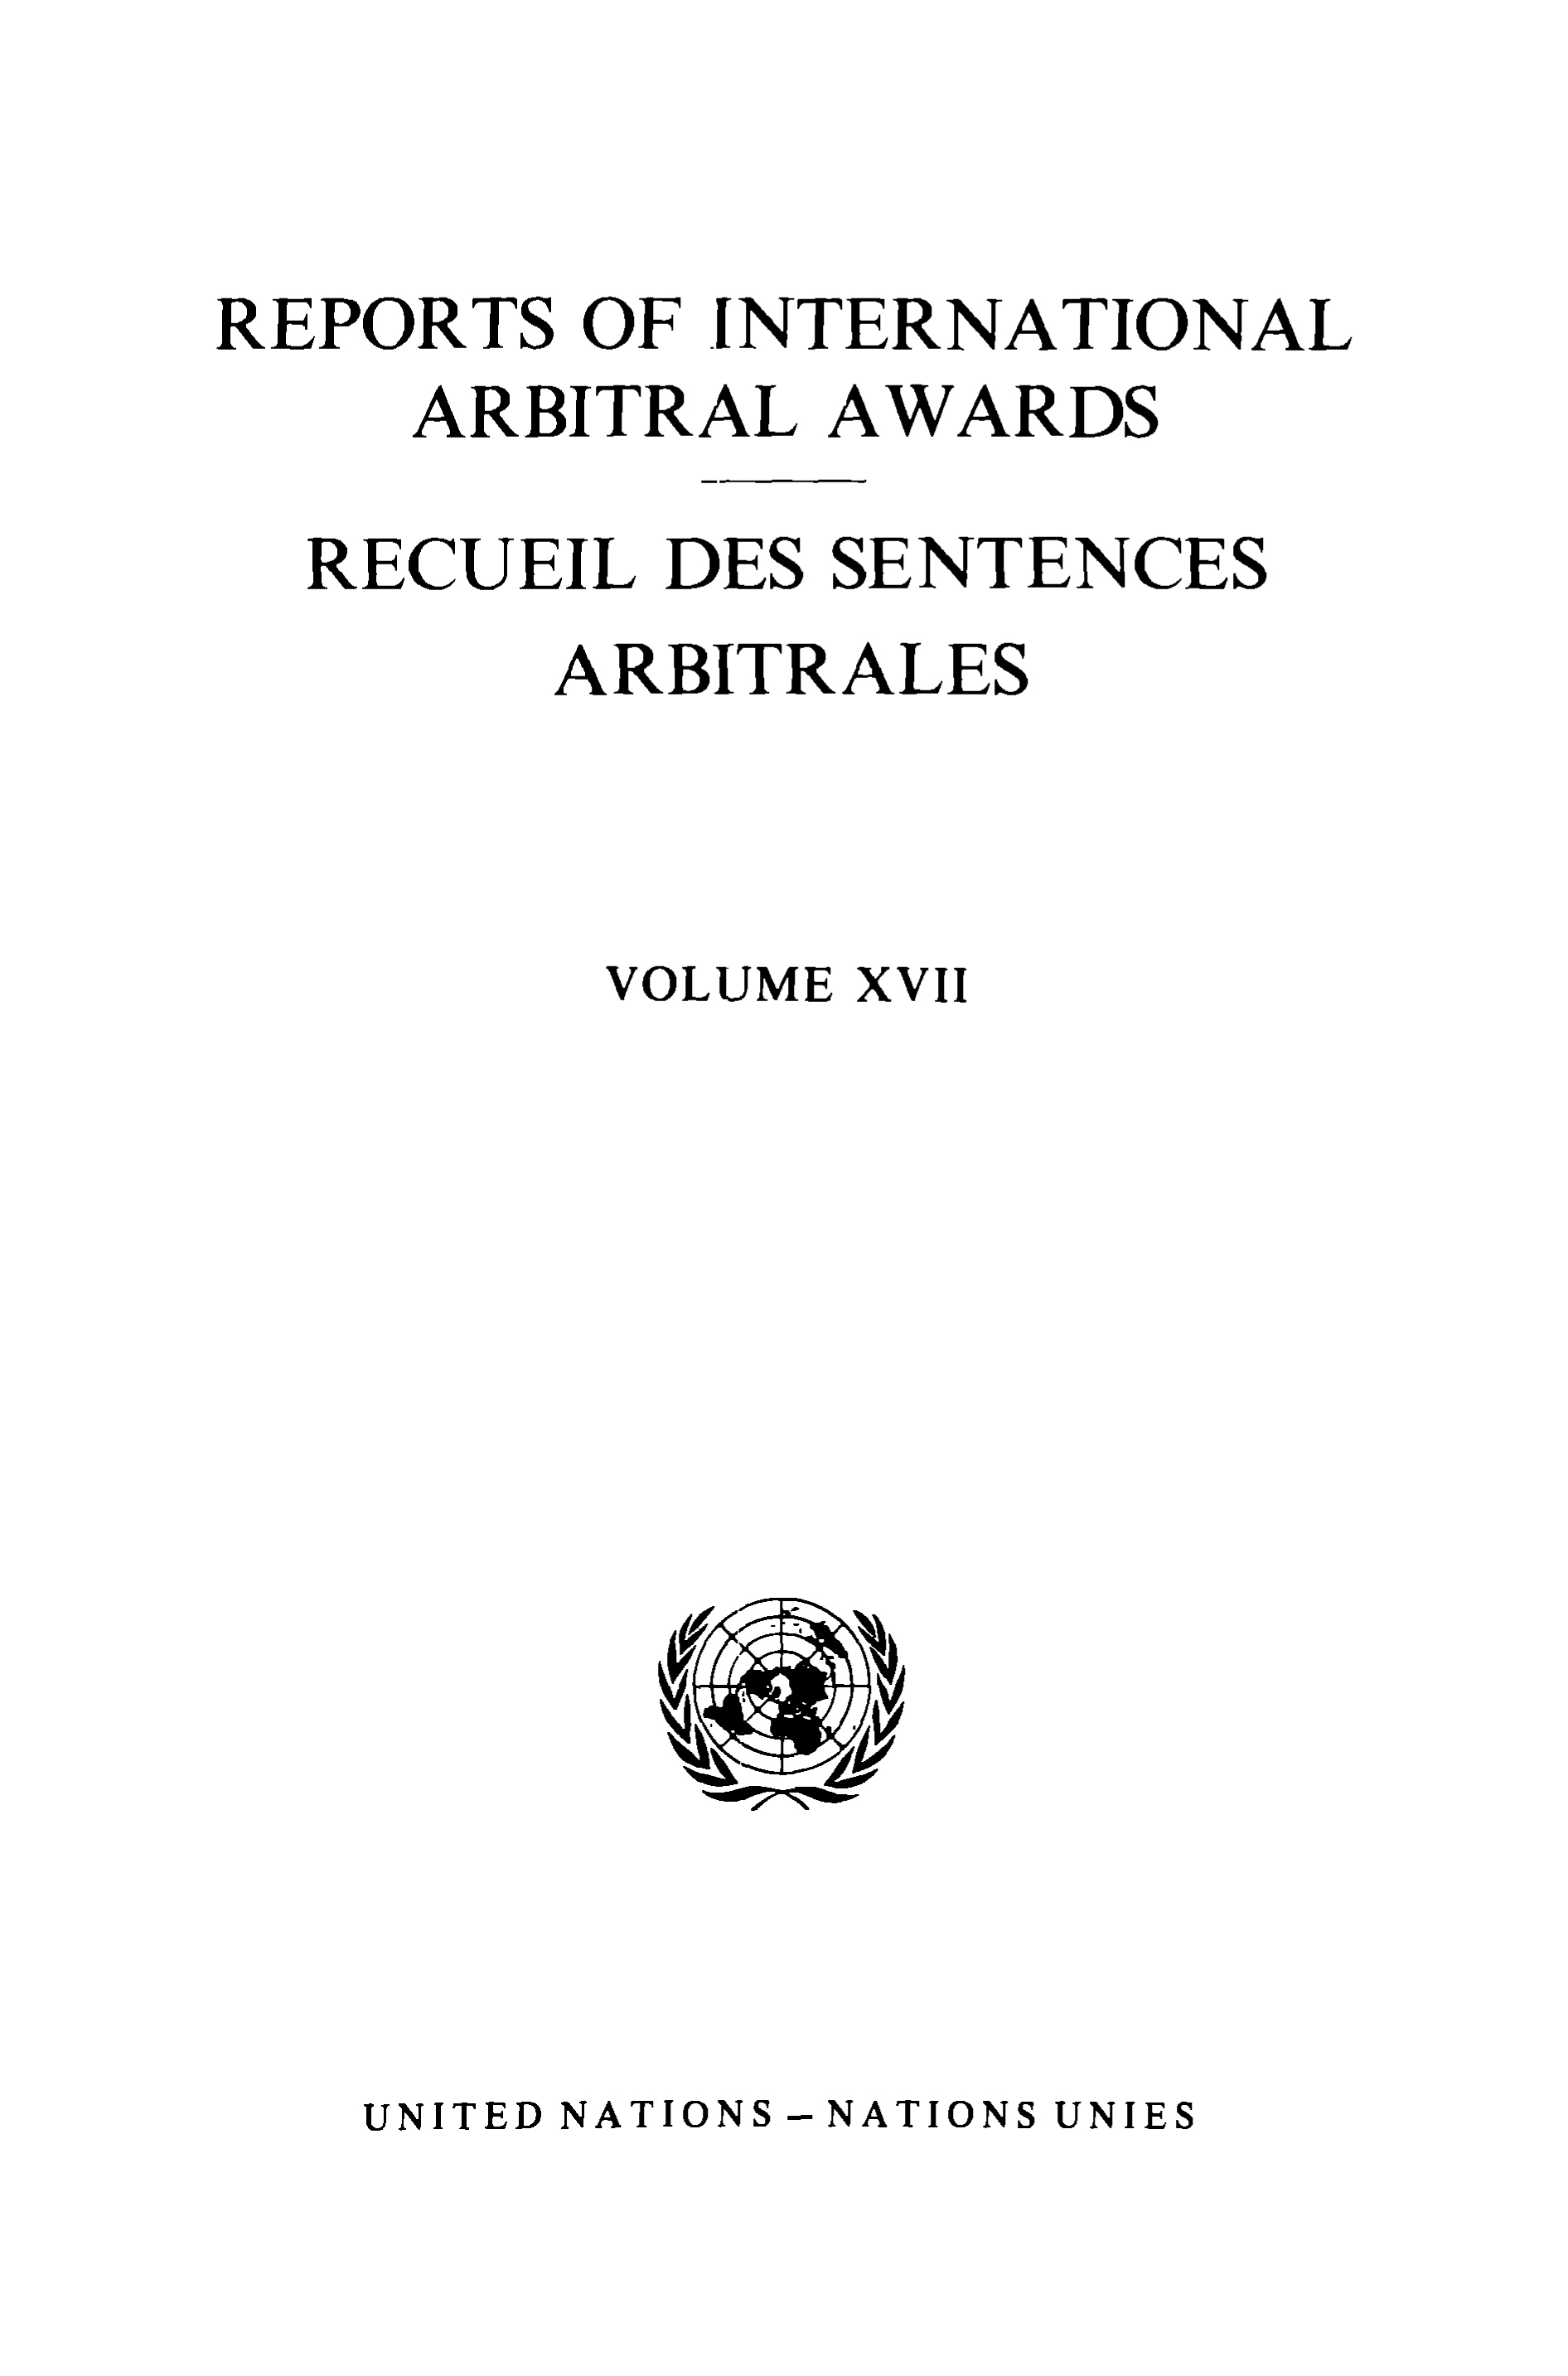 image of Recueil des sentences arbitrales, vol. XVII